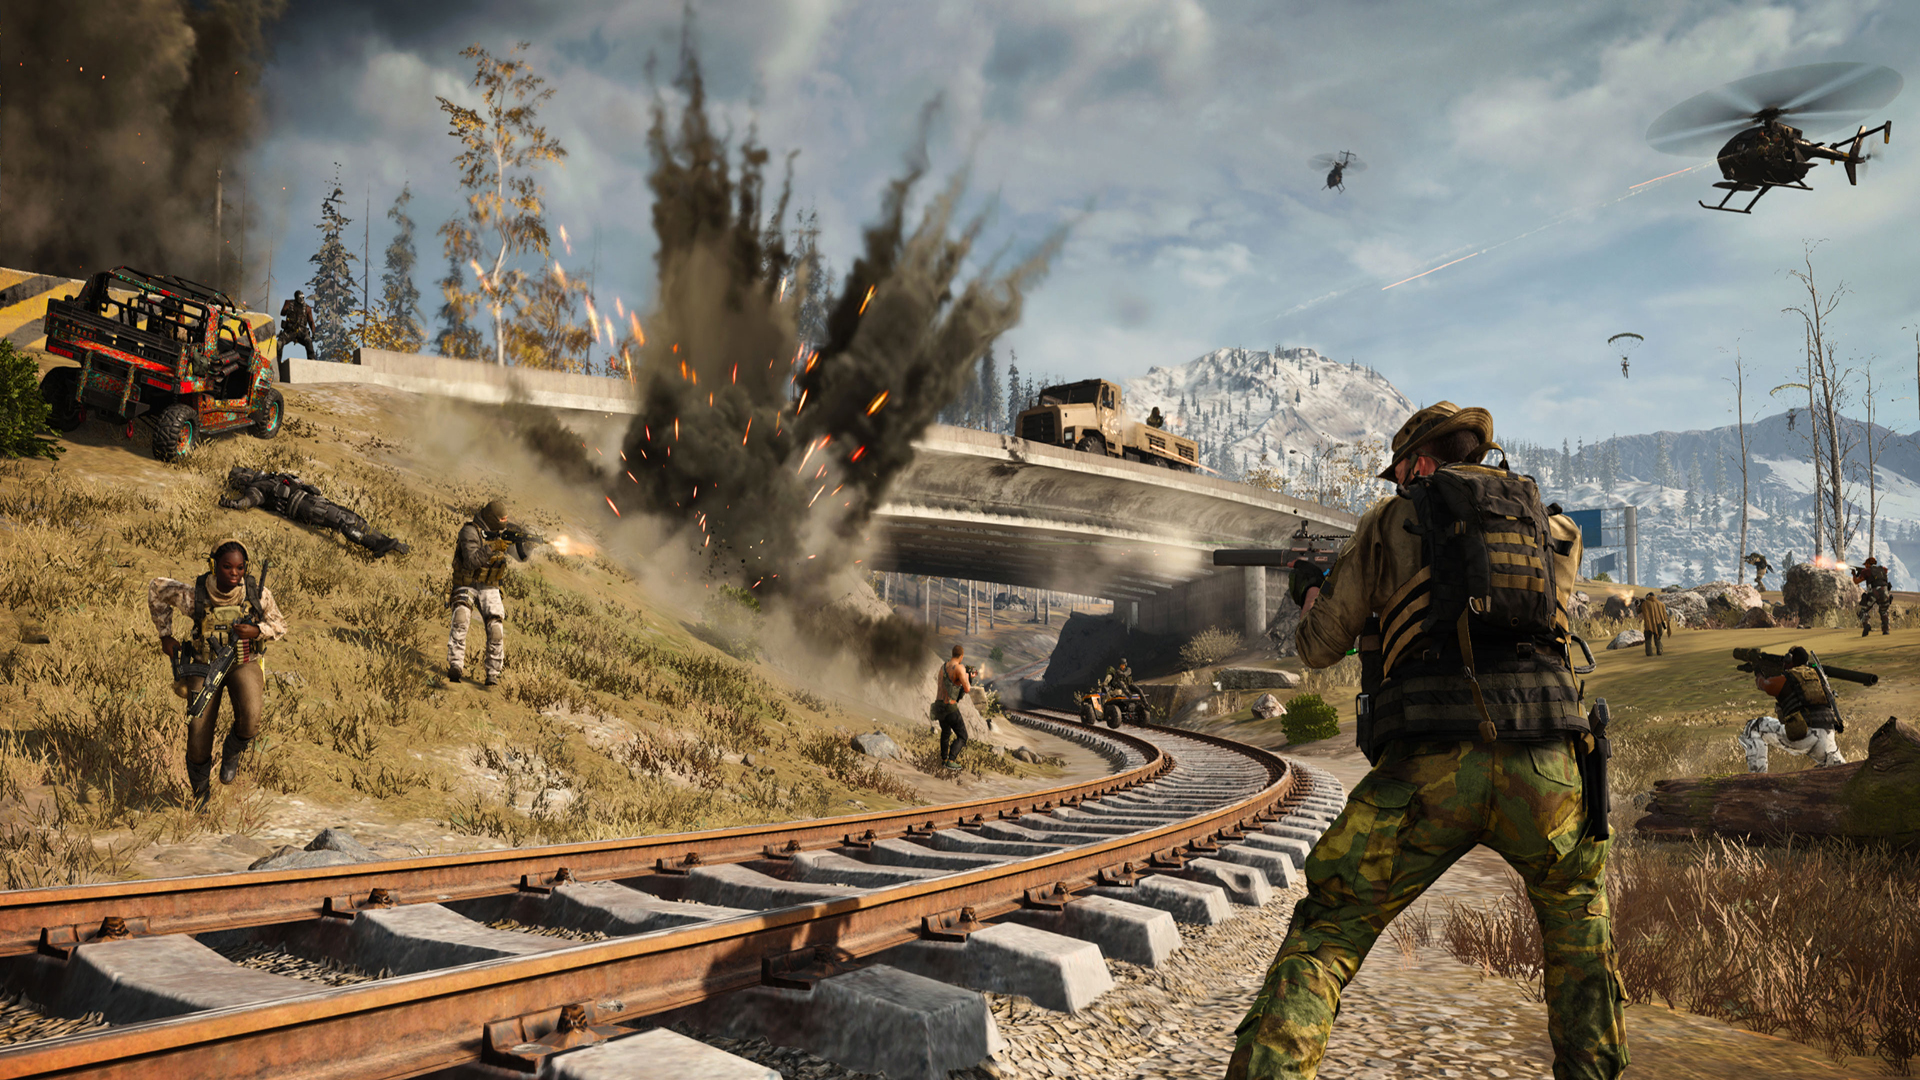 Call of Duty Modern Warfare 3 trailer confirms Verdansk return